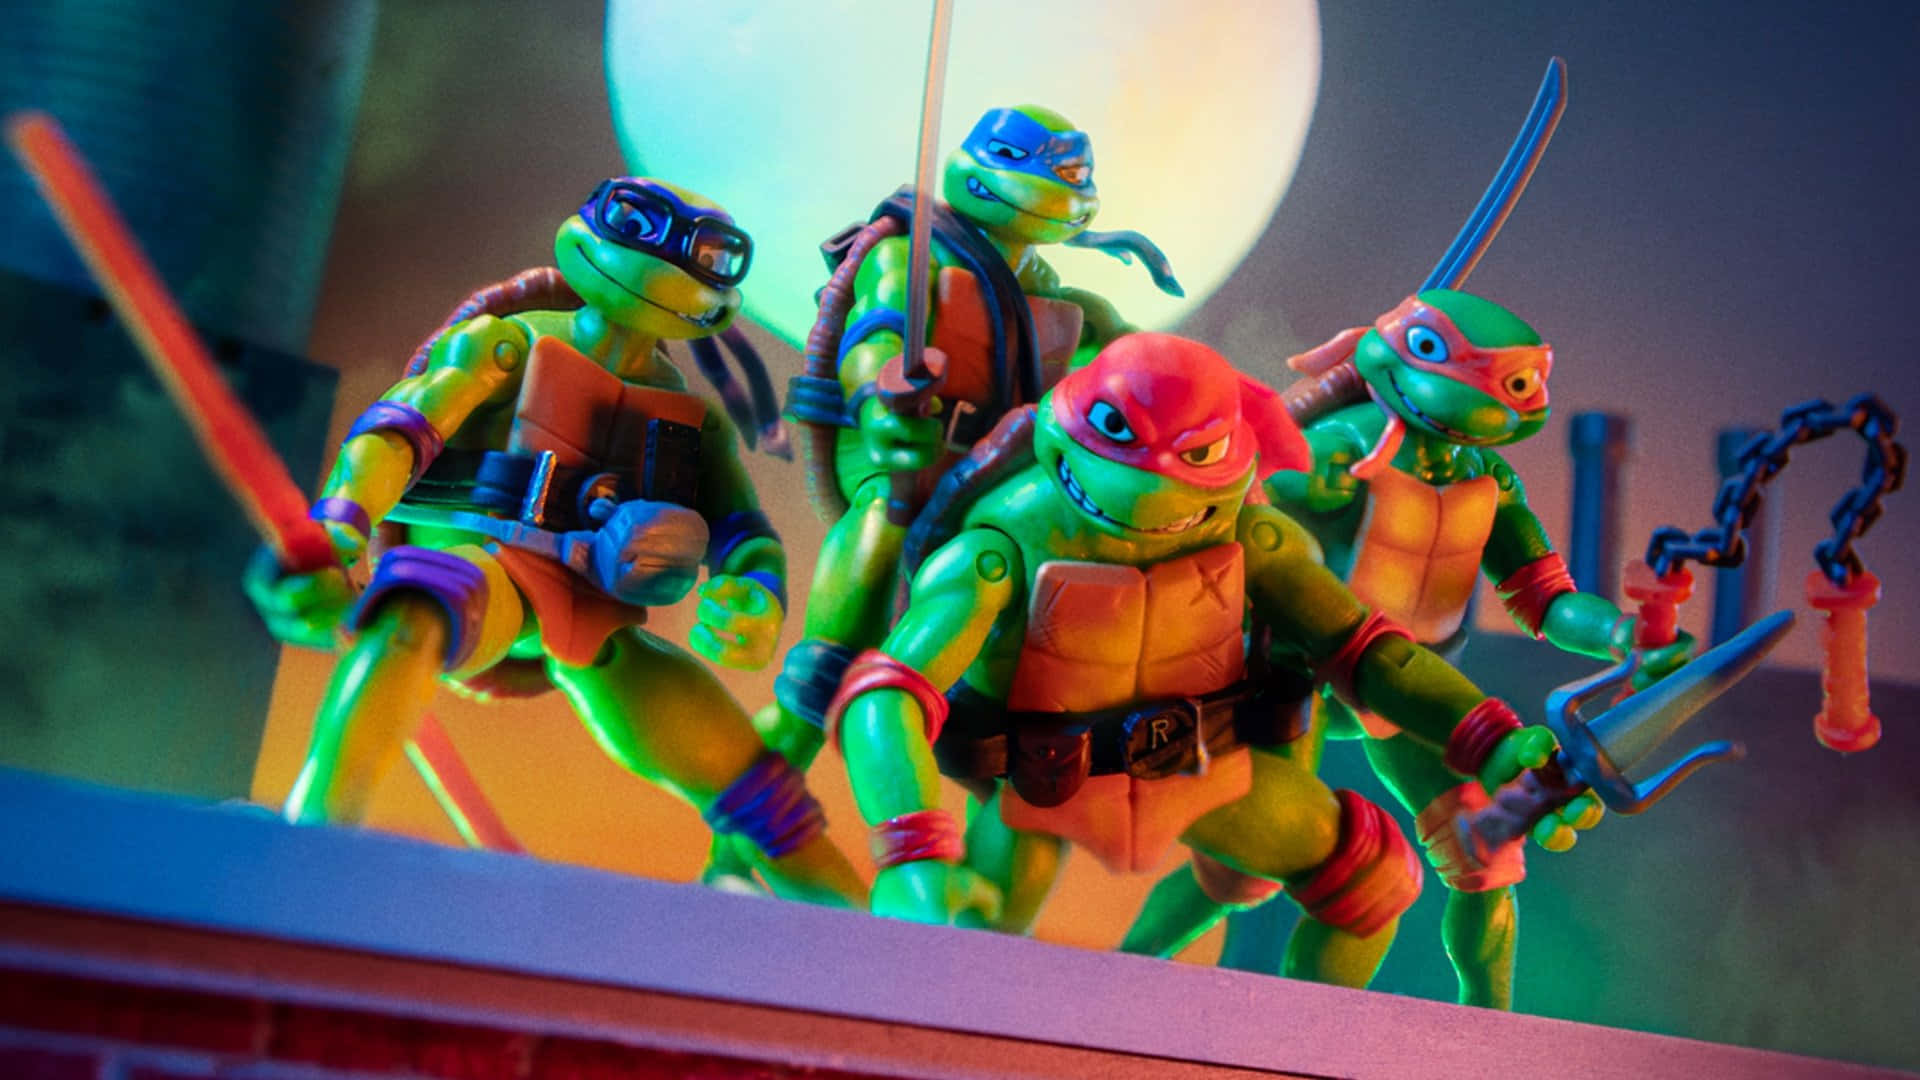 Donatello, Raphael, Leonardo And Michelangelo - The Legendary Teenage Mutant Ninja Turtles